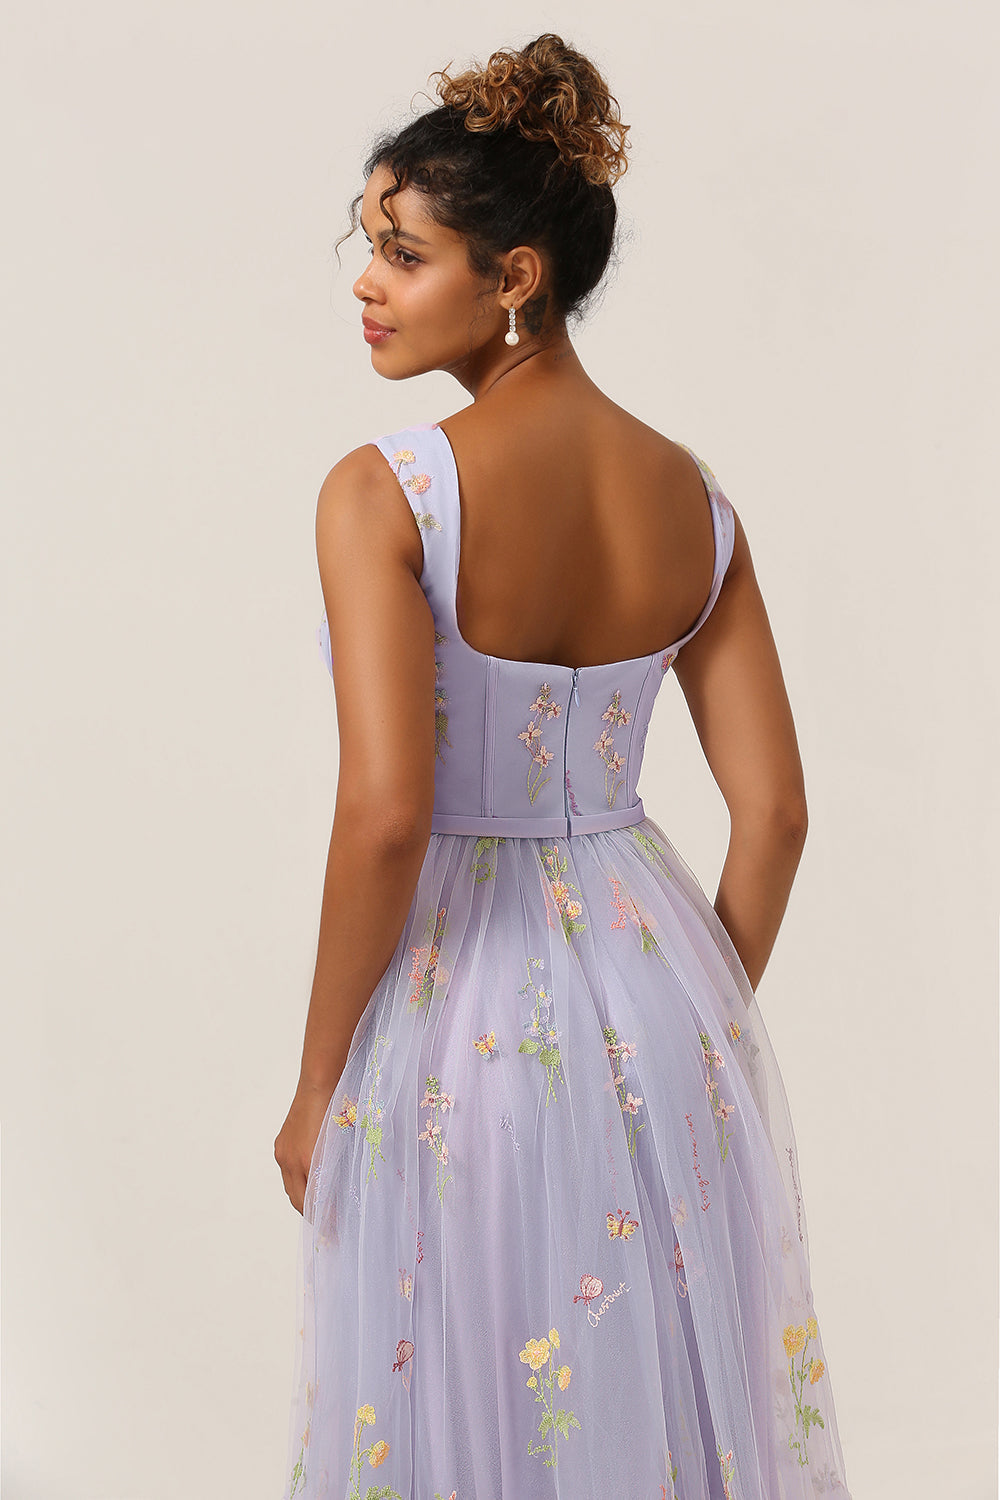 Princess A Line Sweetheart Light Purple Long Ball Dress with Embroidery